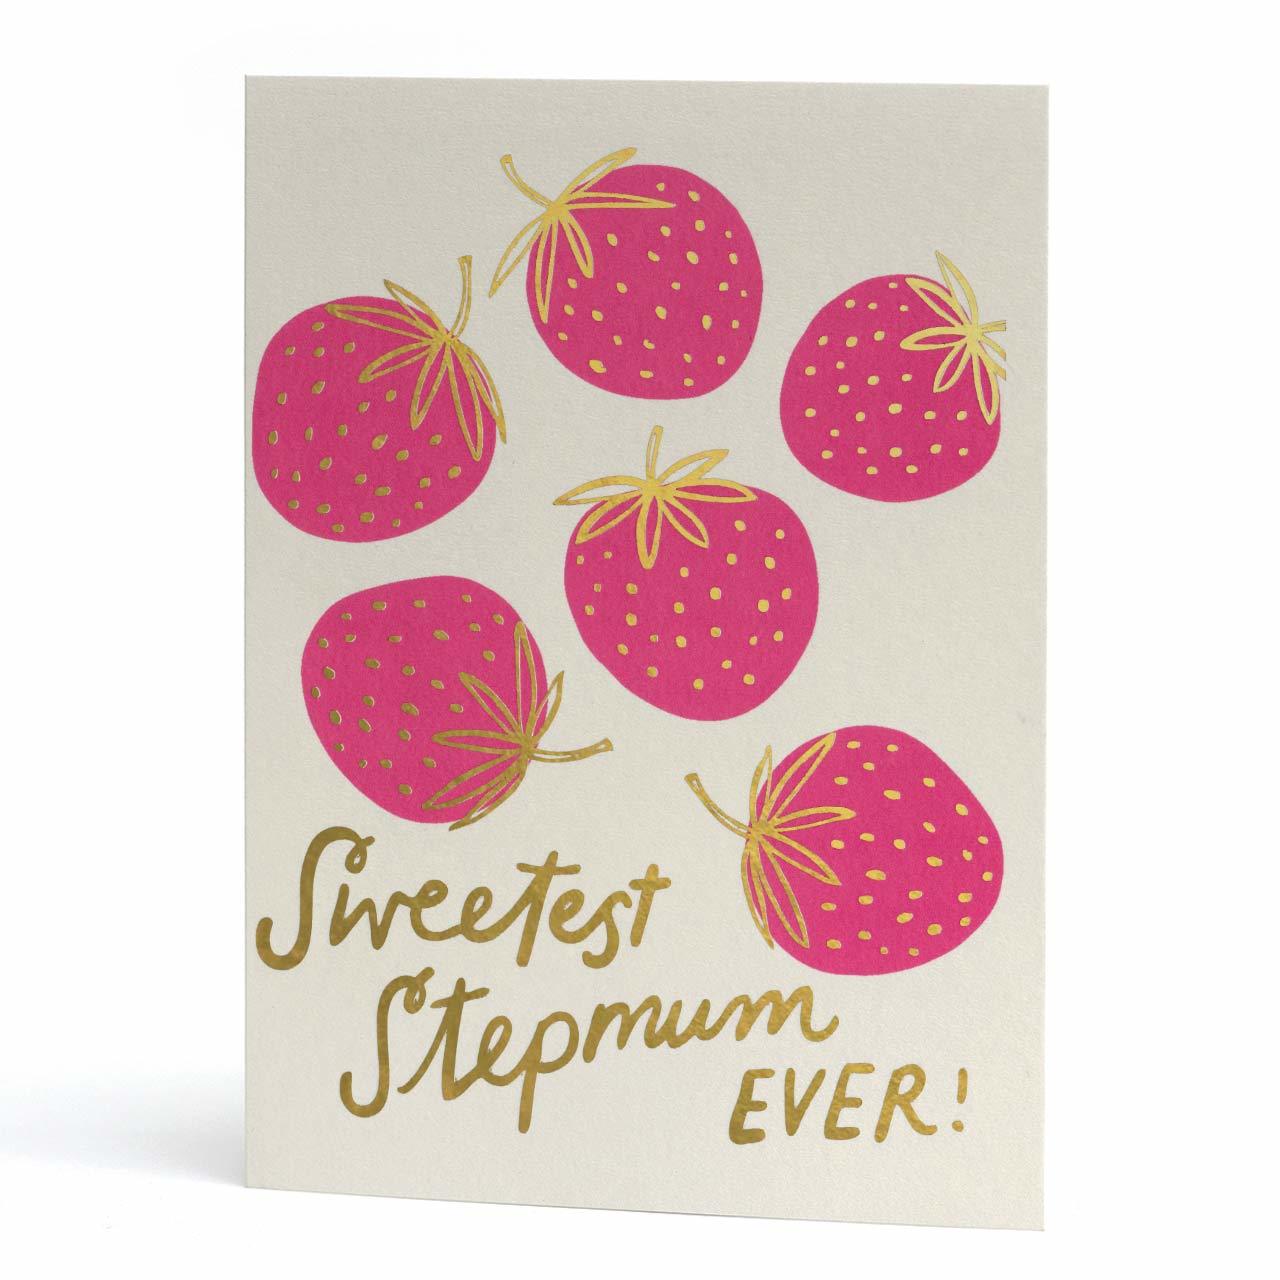 Sweetest Stepmum Ever Gold Foil Card